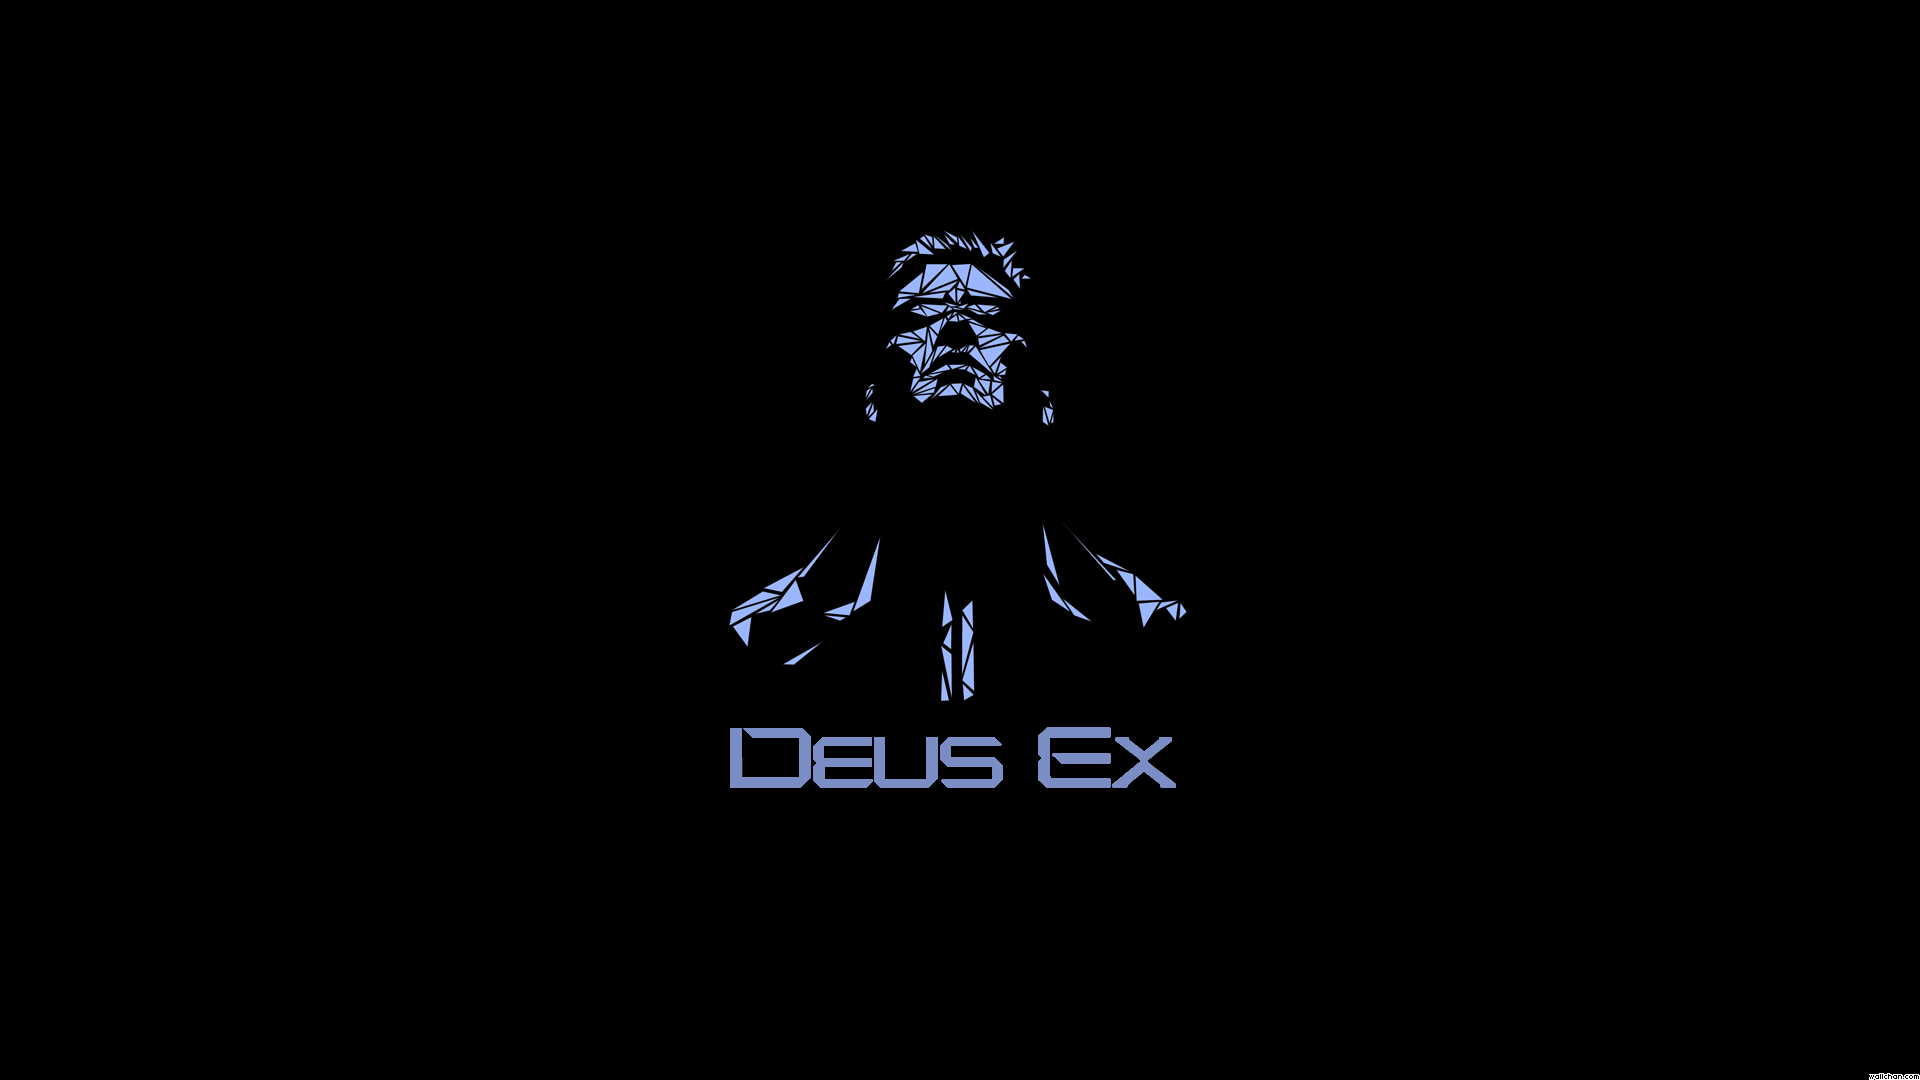 Video Game Deus Ex Wallpaper. Name wallpaper, Deus